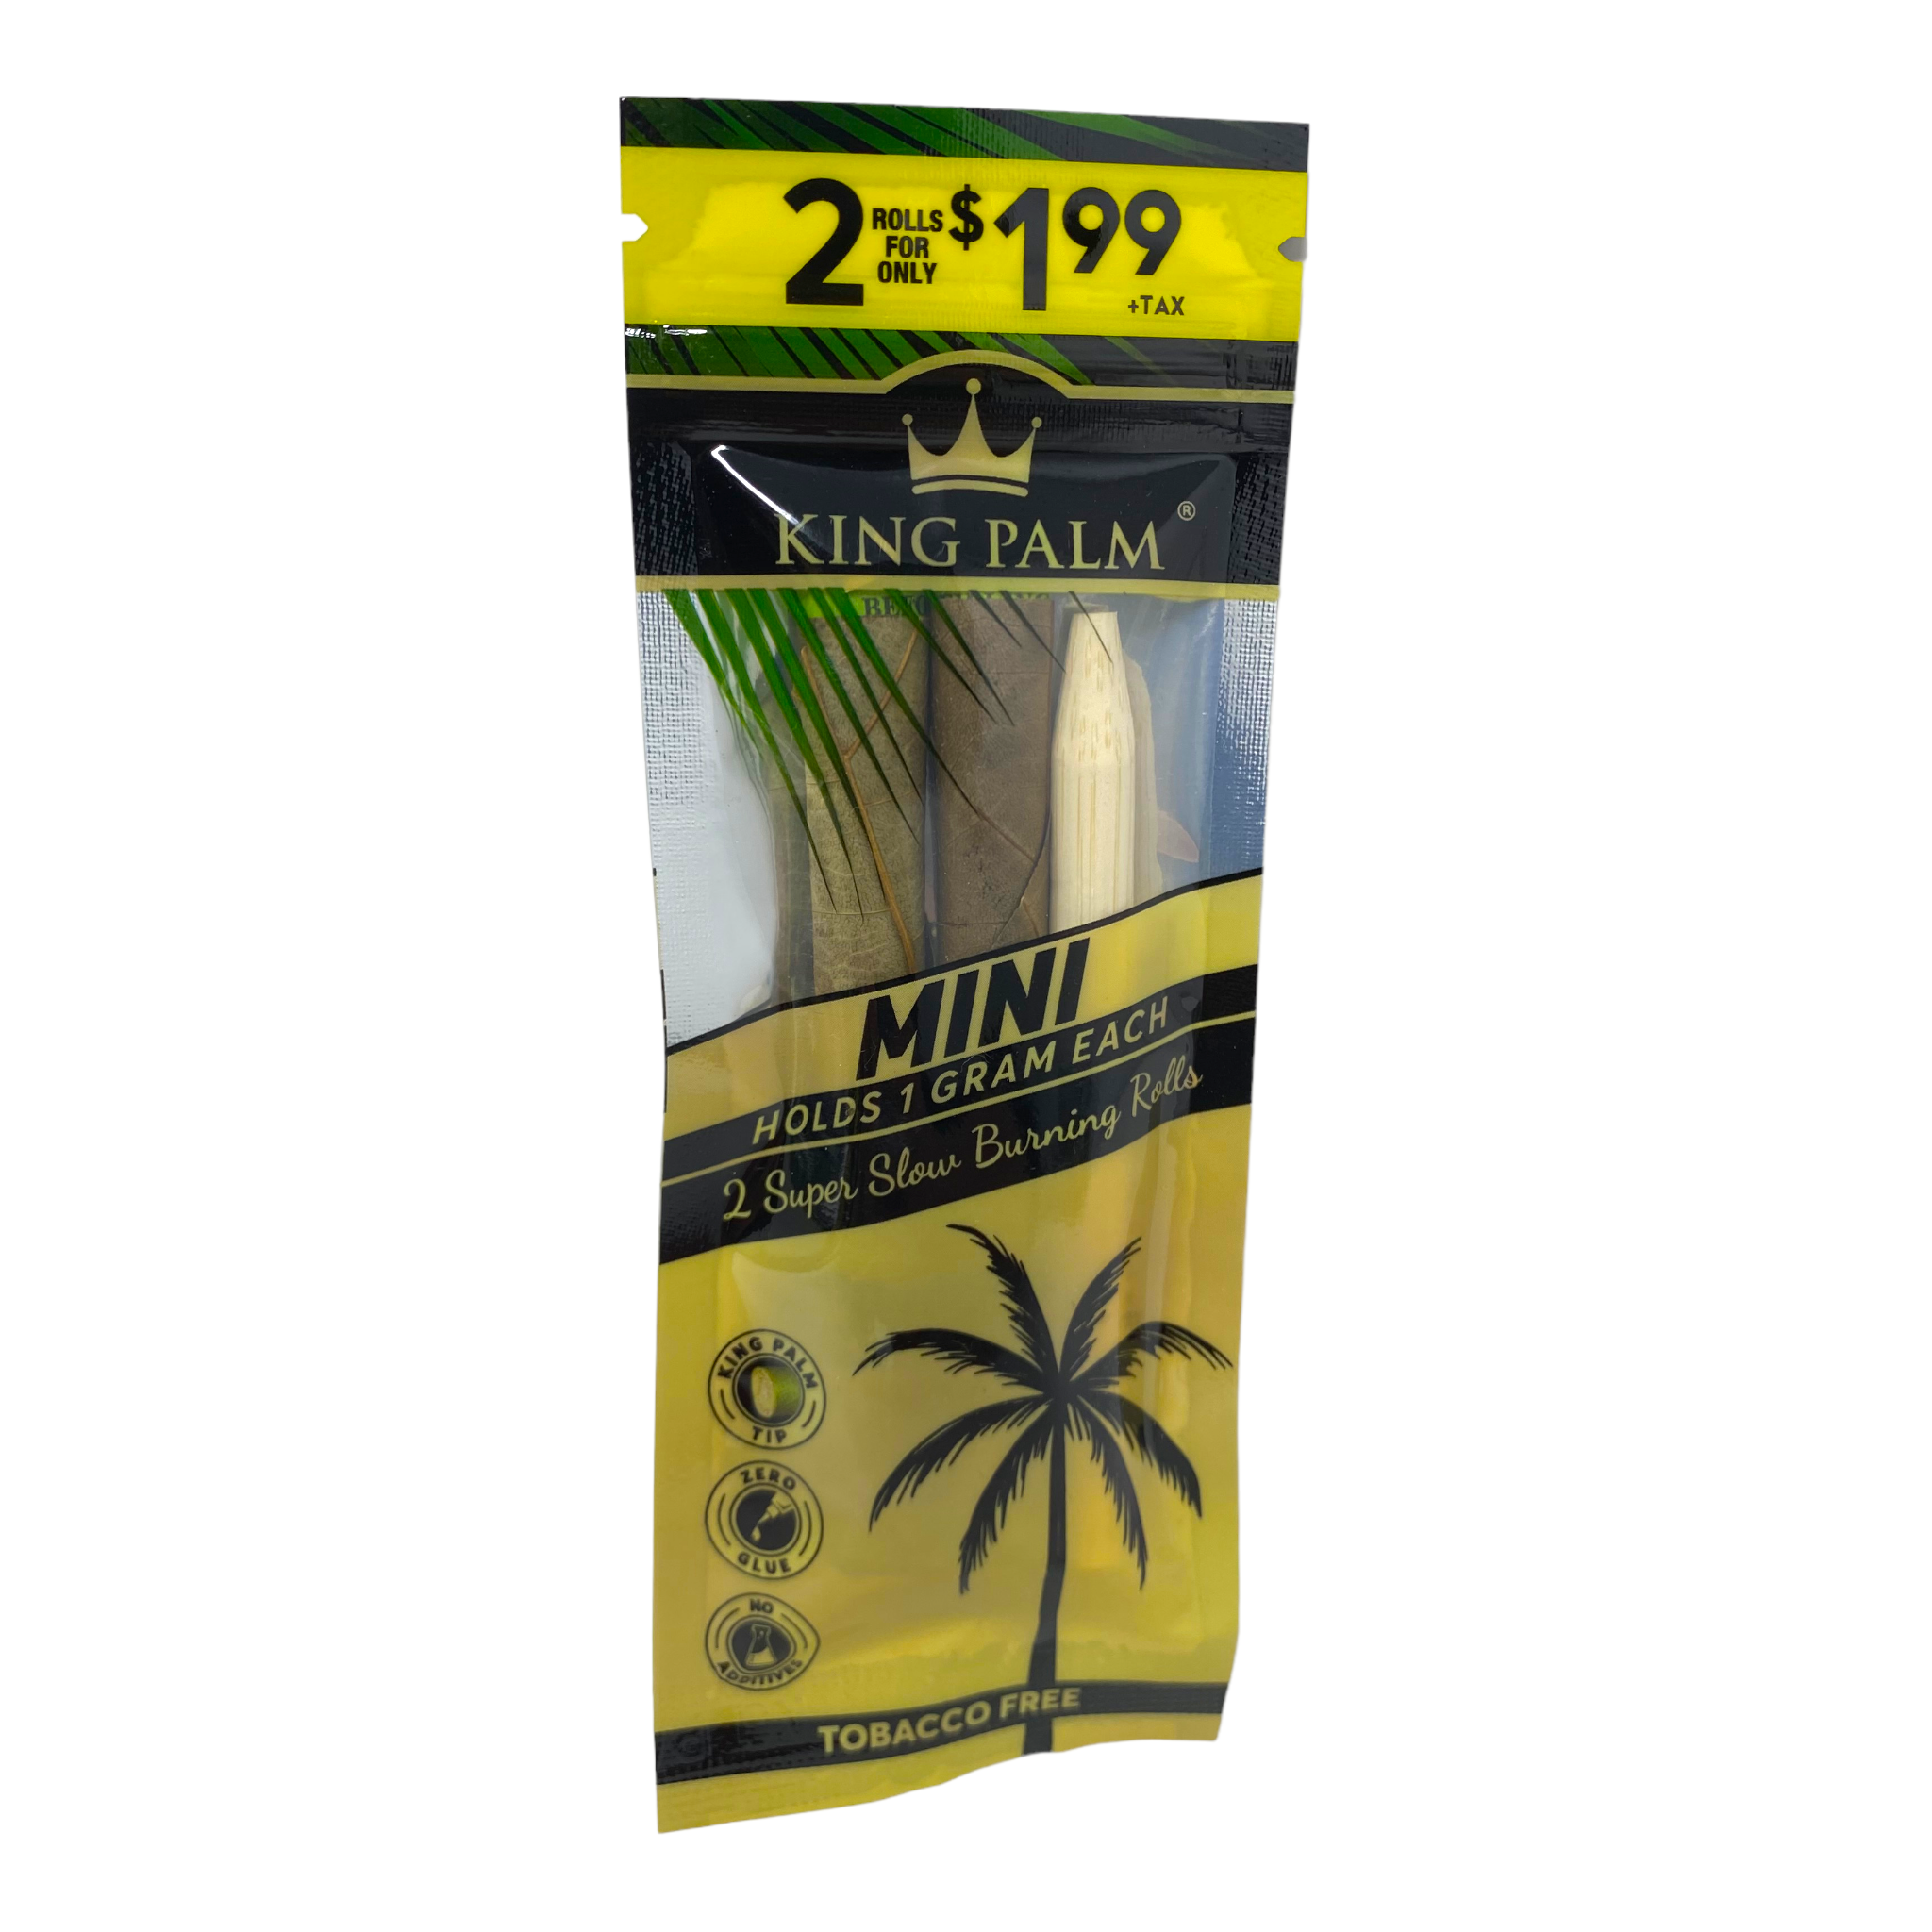 King Palm Flavorless Pre-Rolls